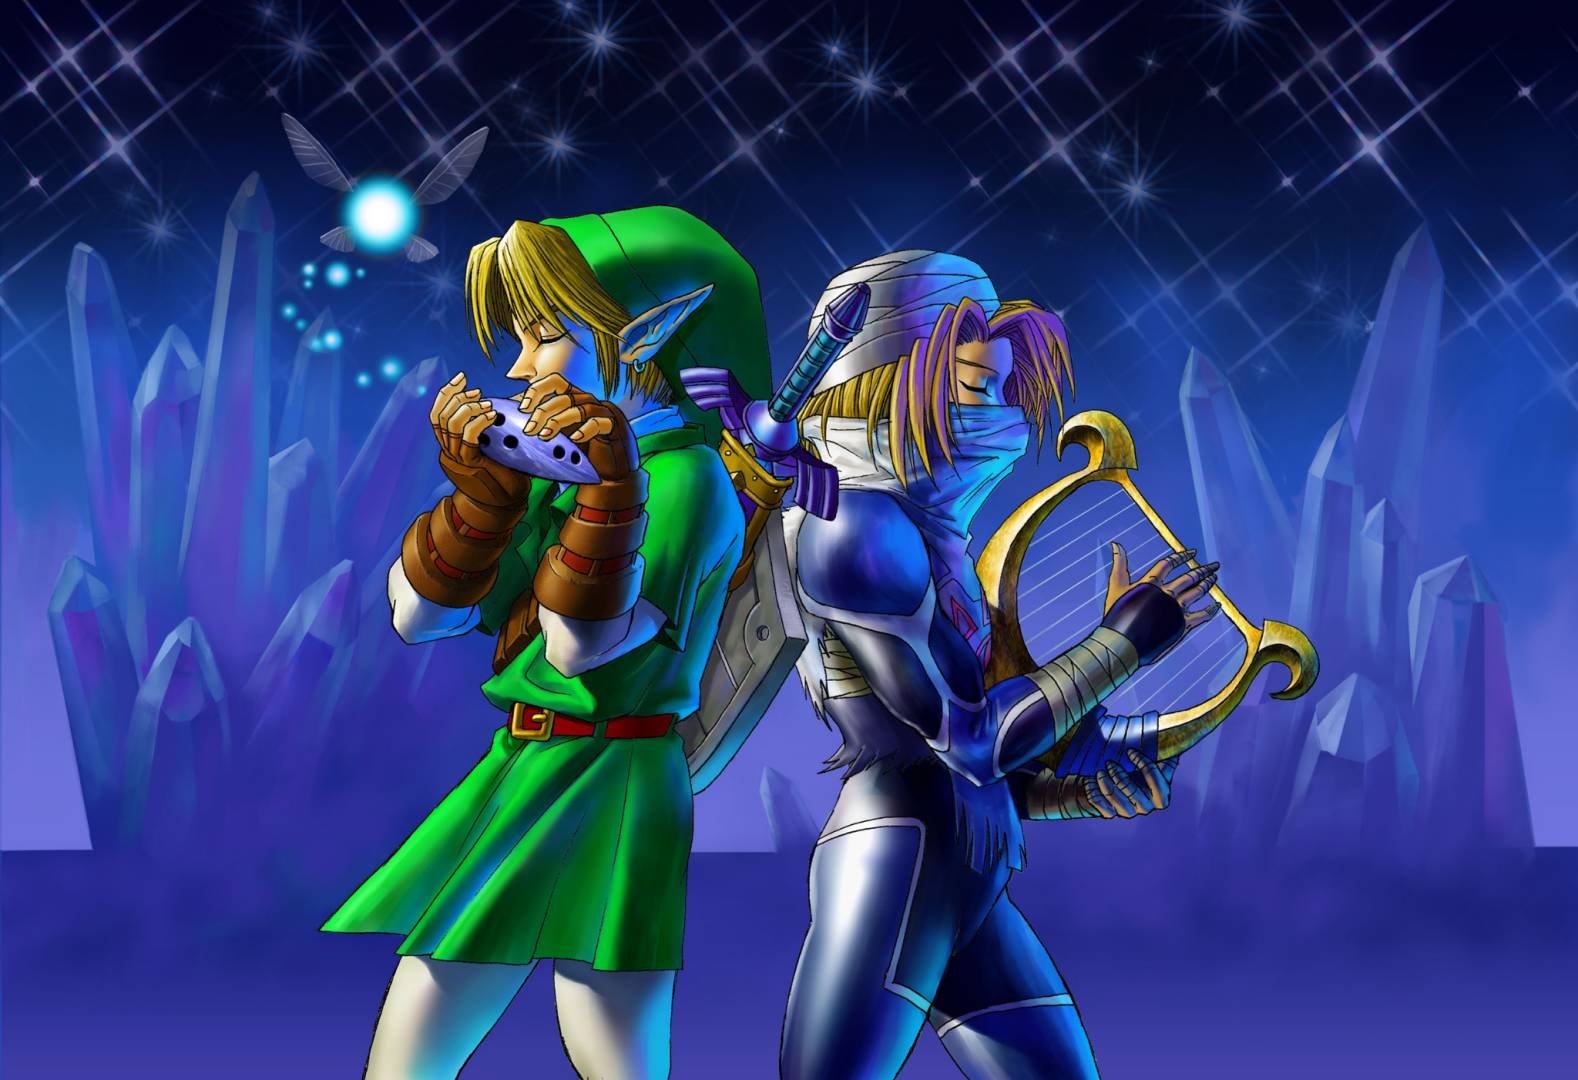 Immagine di Zelda Ocarina of Time in Unreal Engine 5 è clamoroso!